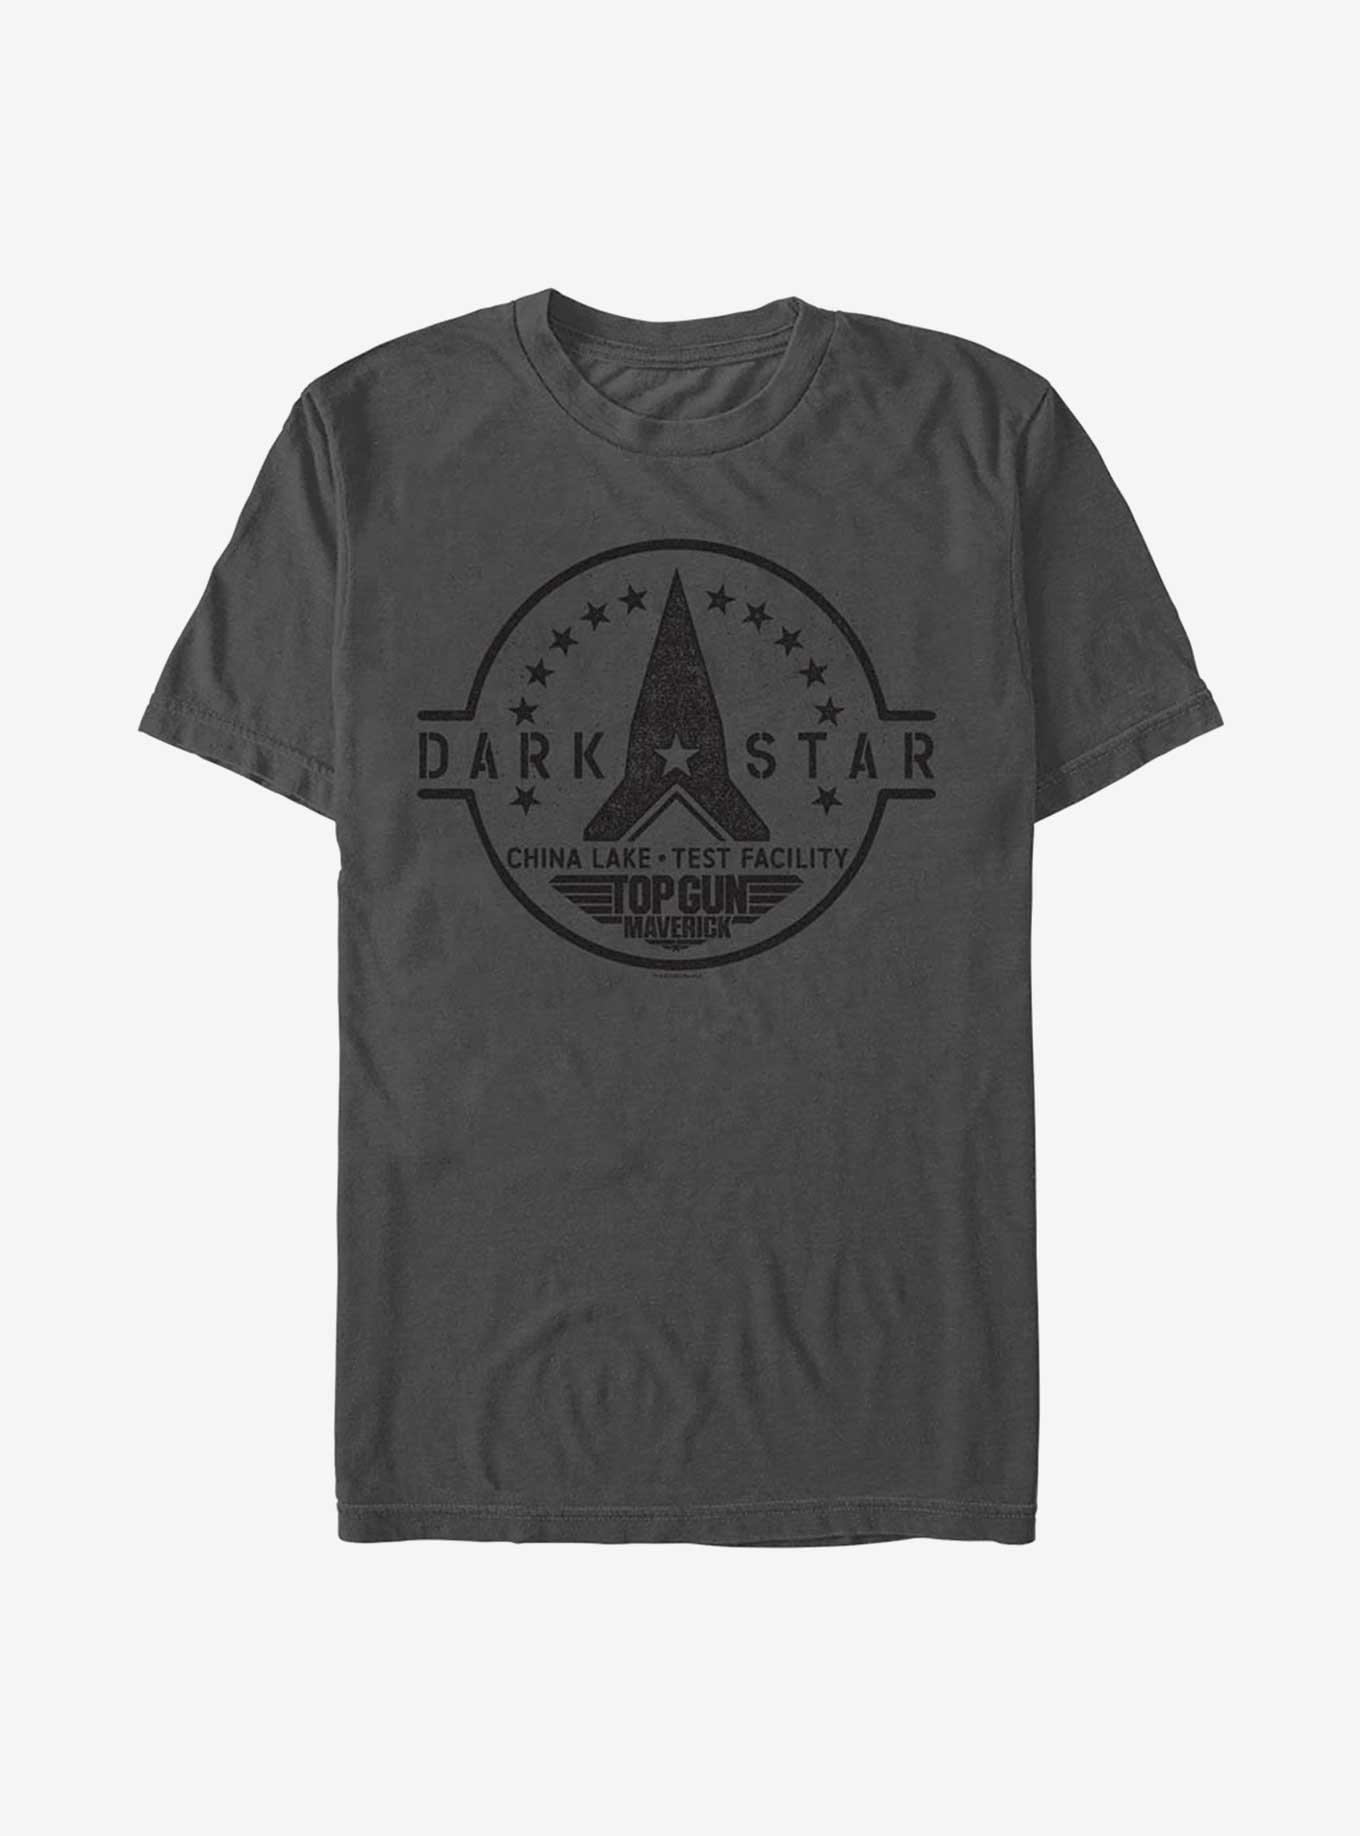 Top Gun Maverick Dark Star T-Shirt, CHARCOAL, hi-res